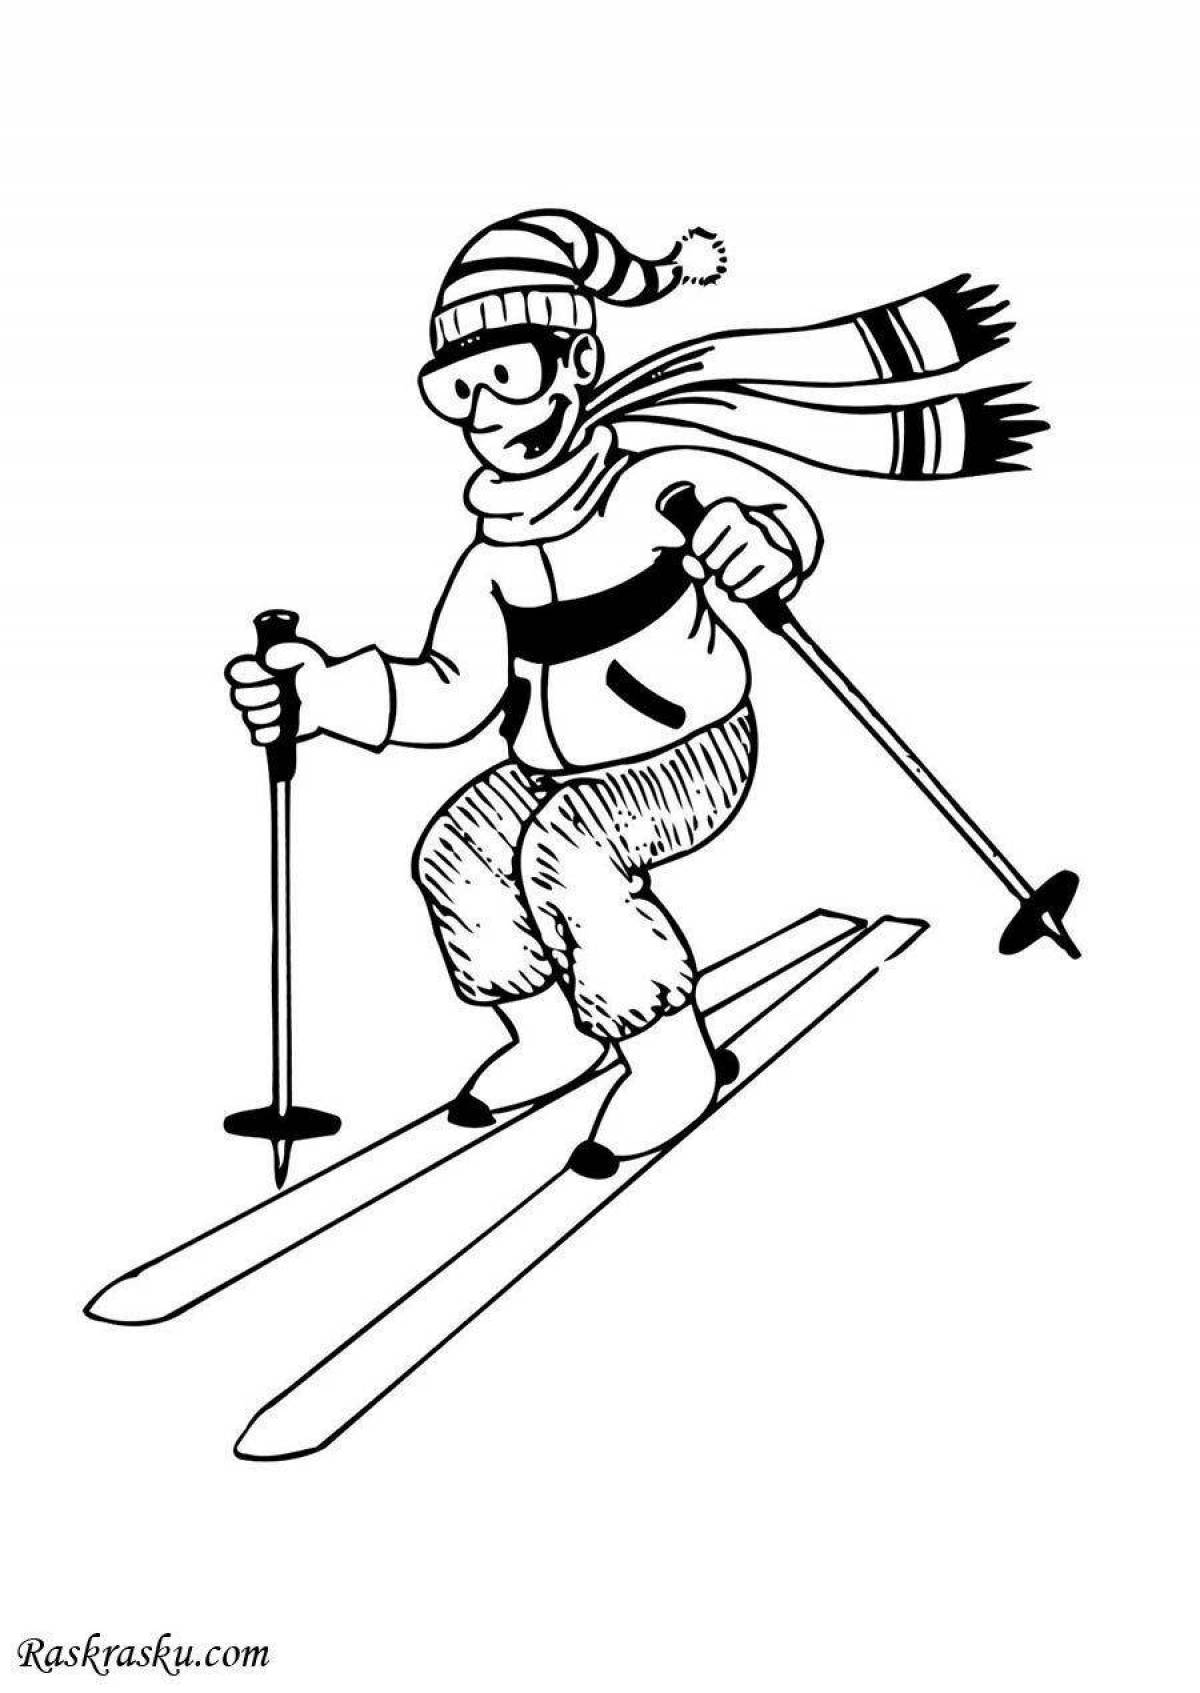 Coloring book determined senior skier